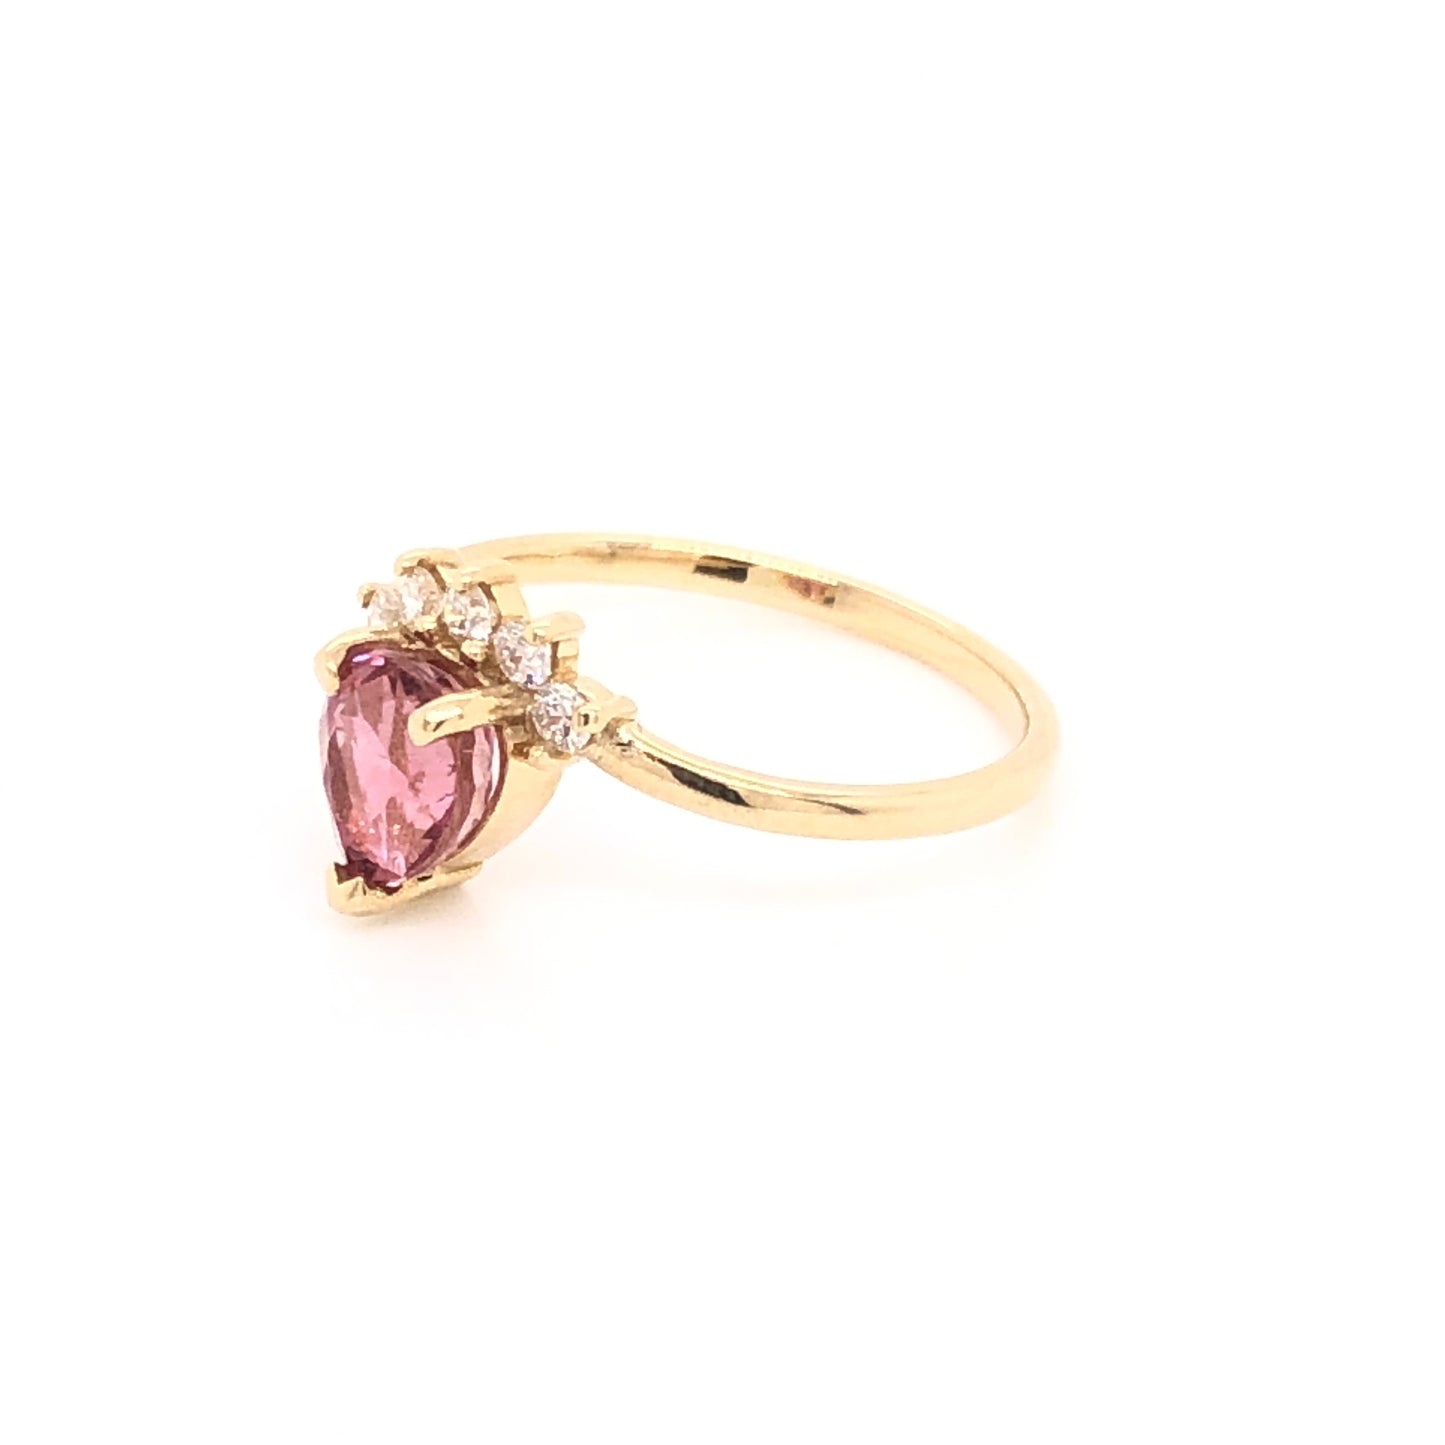 Pink Tourmaline Ring with Diamond Crown